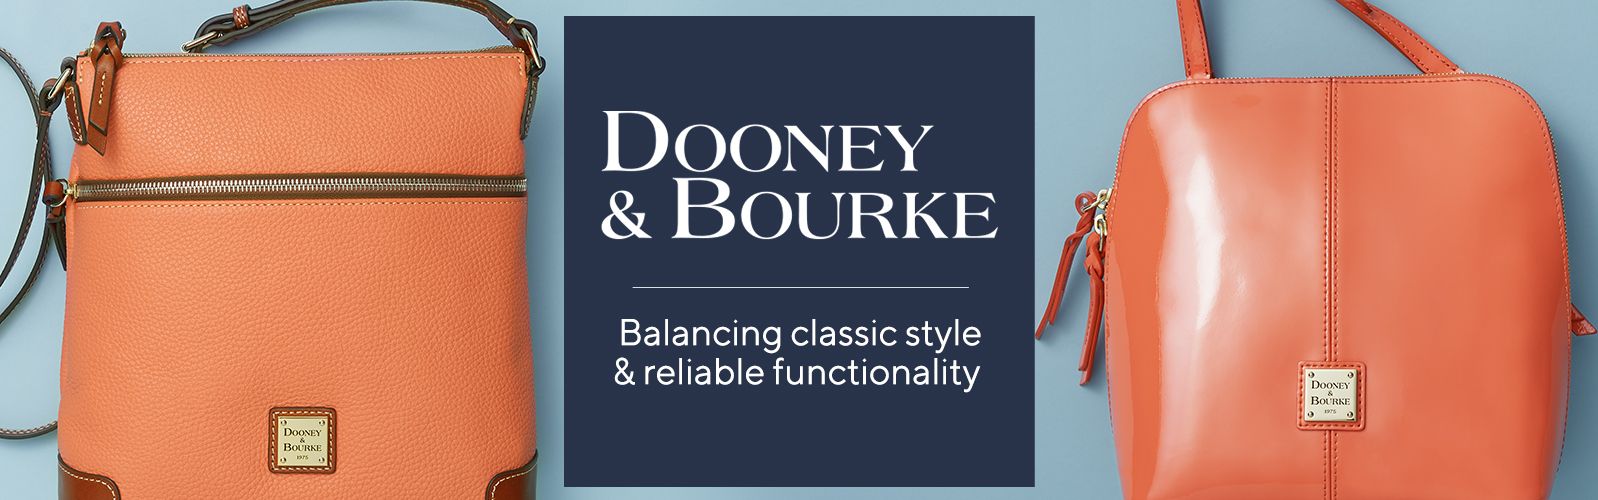 qvc dooney and bourke official site .com